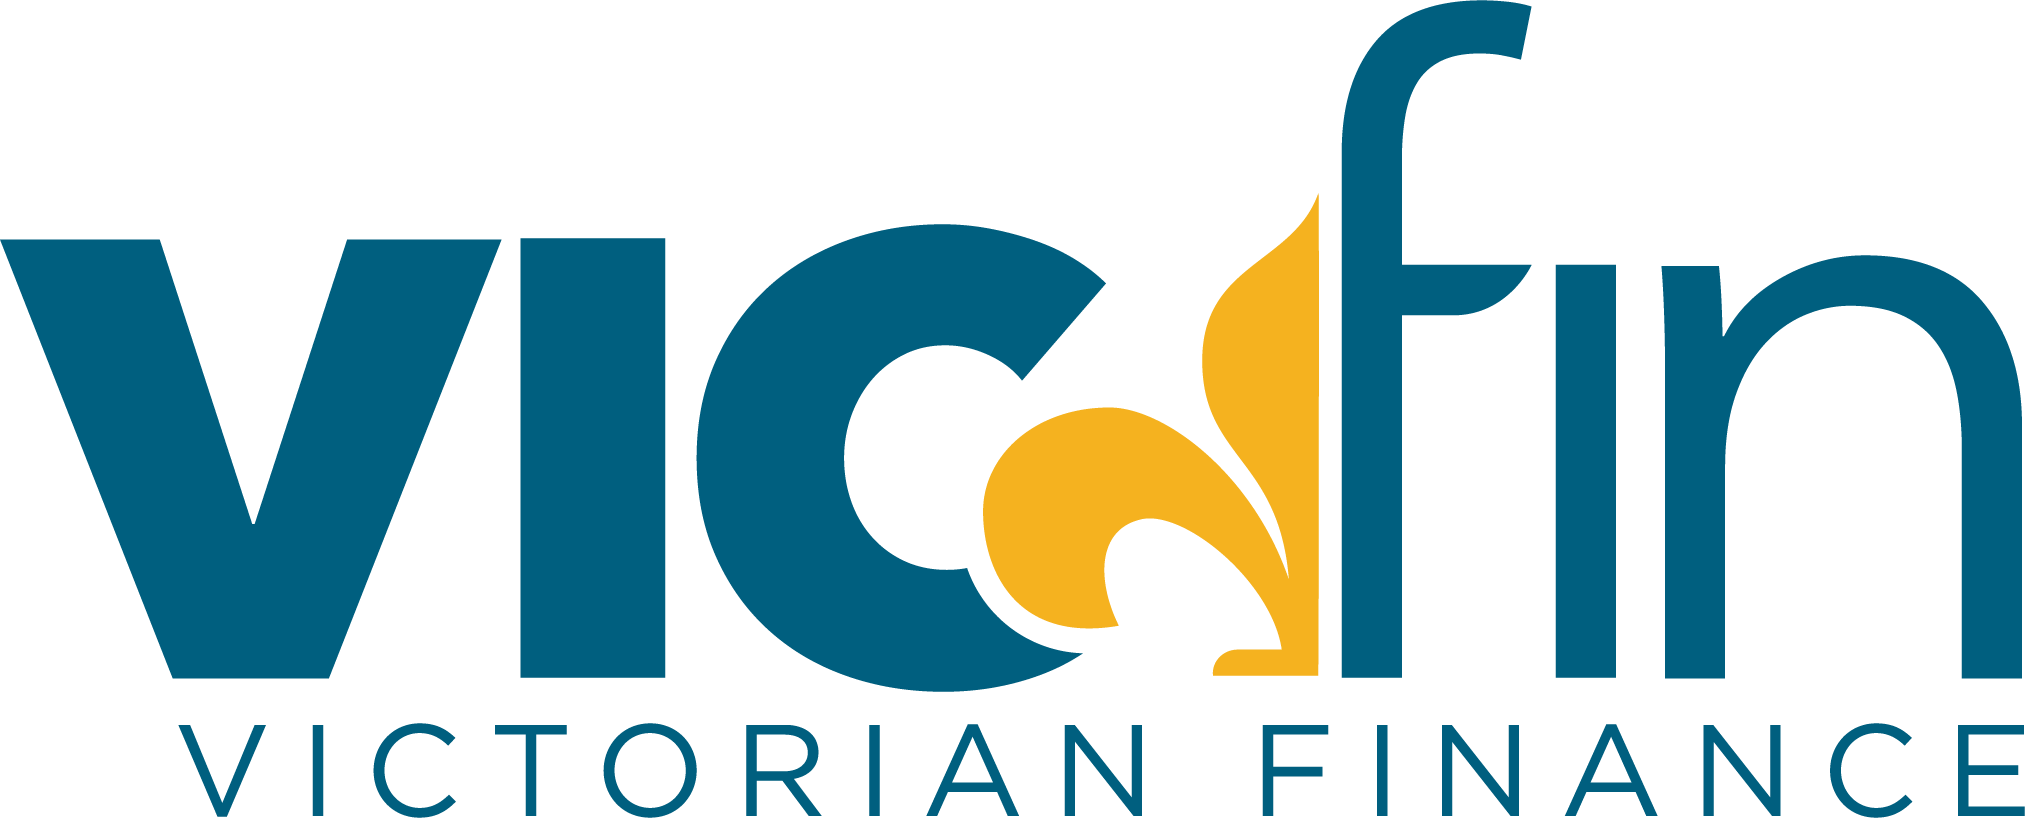 Victorian Finance, LLC logo